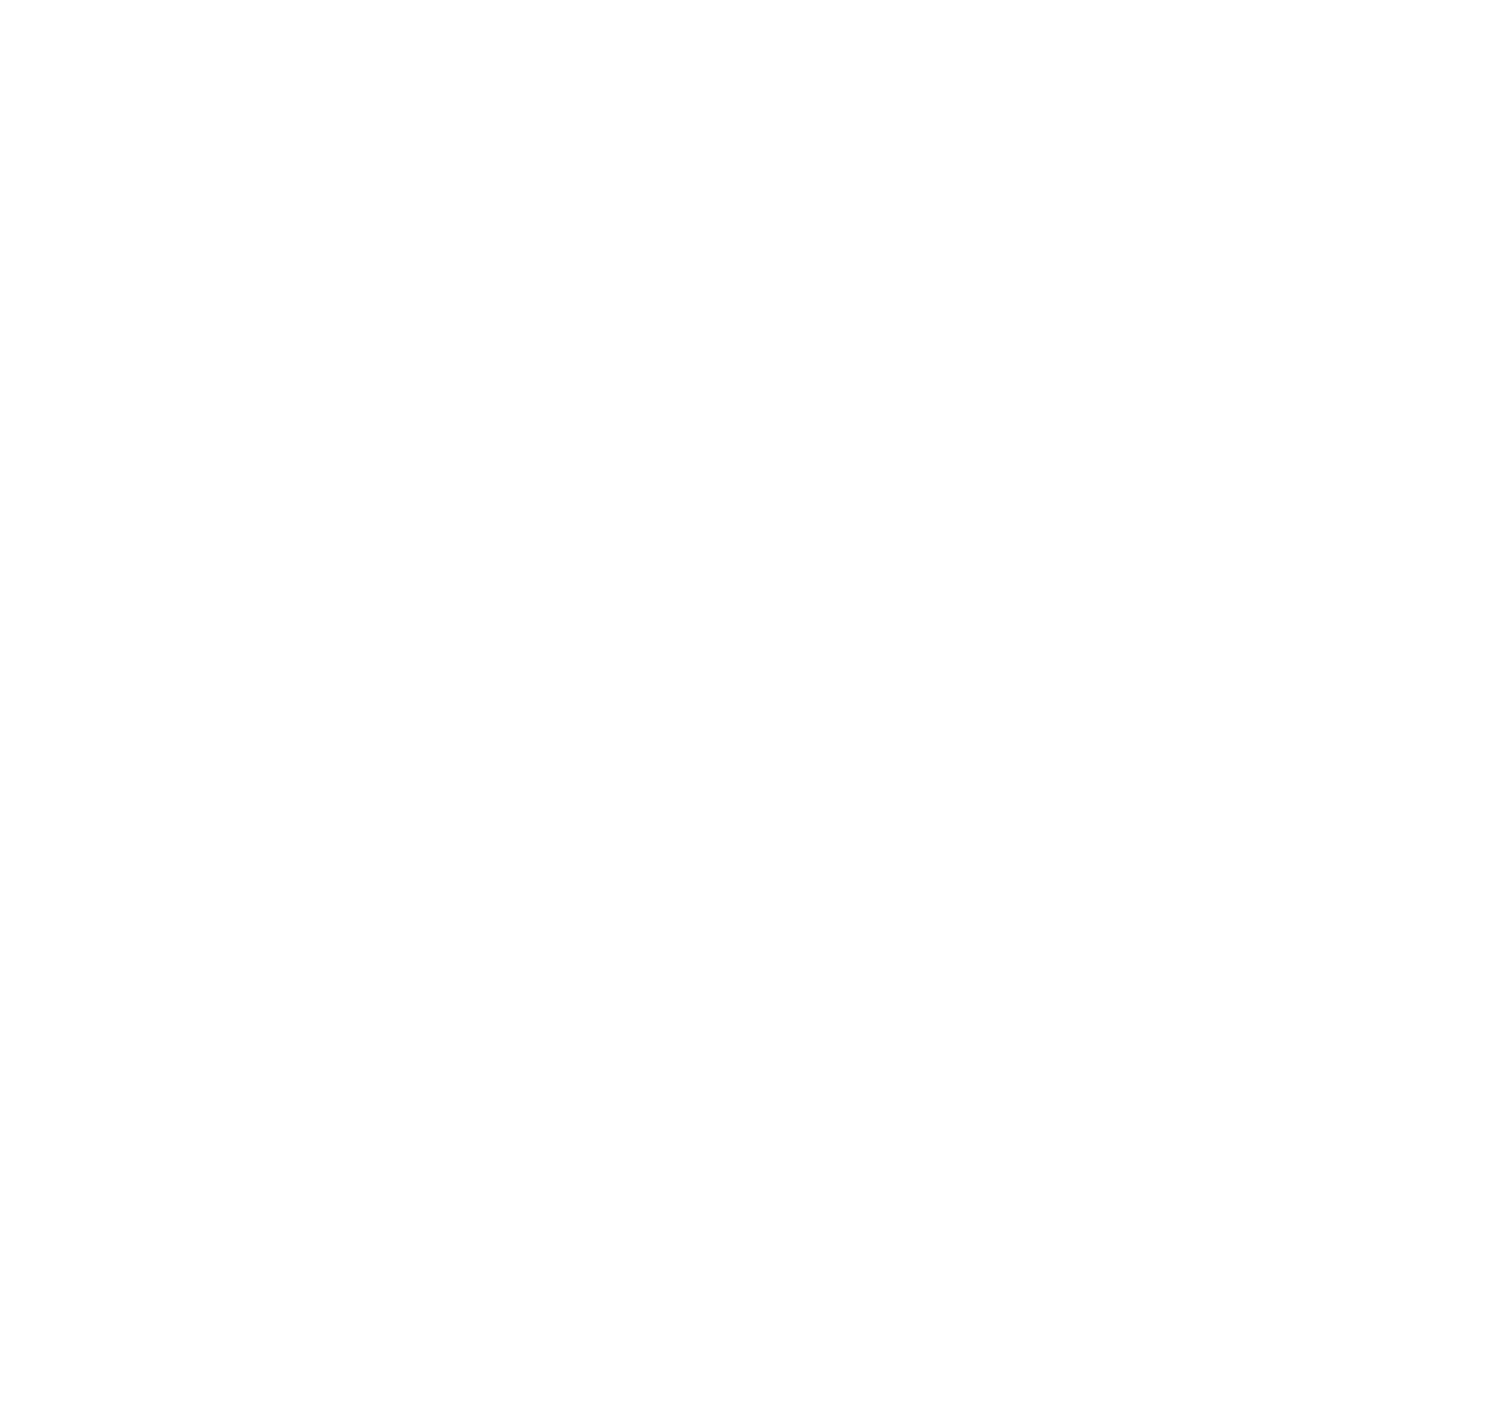 A Blind Pig